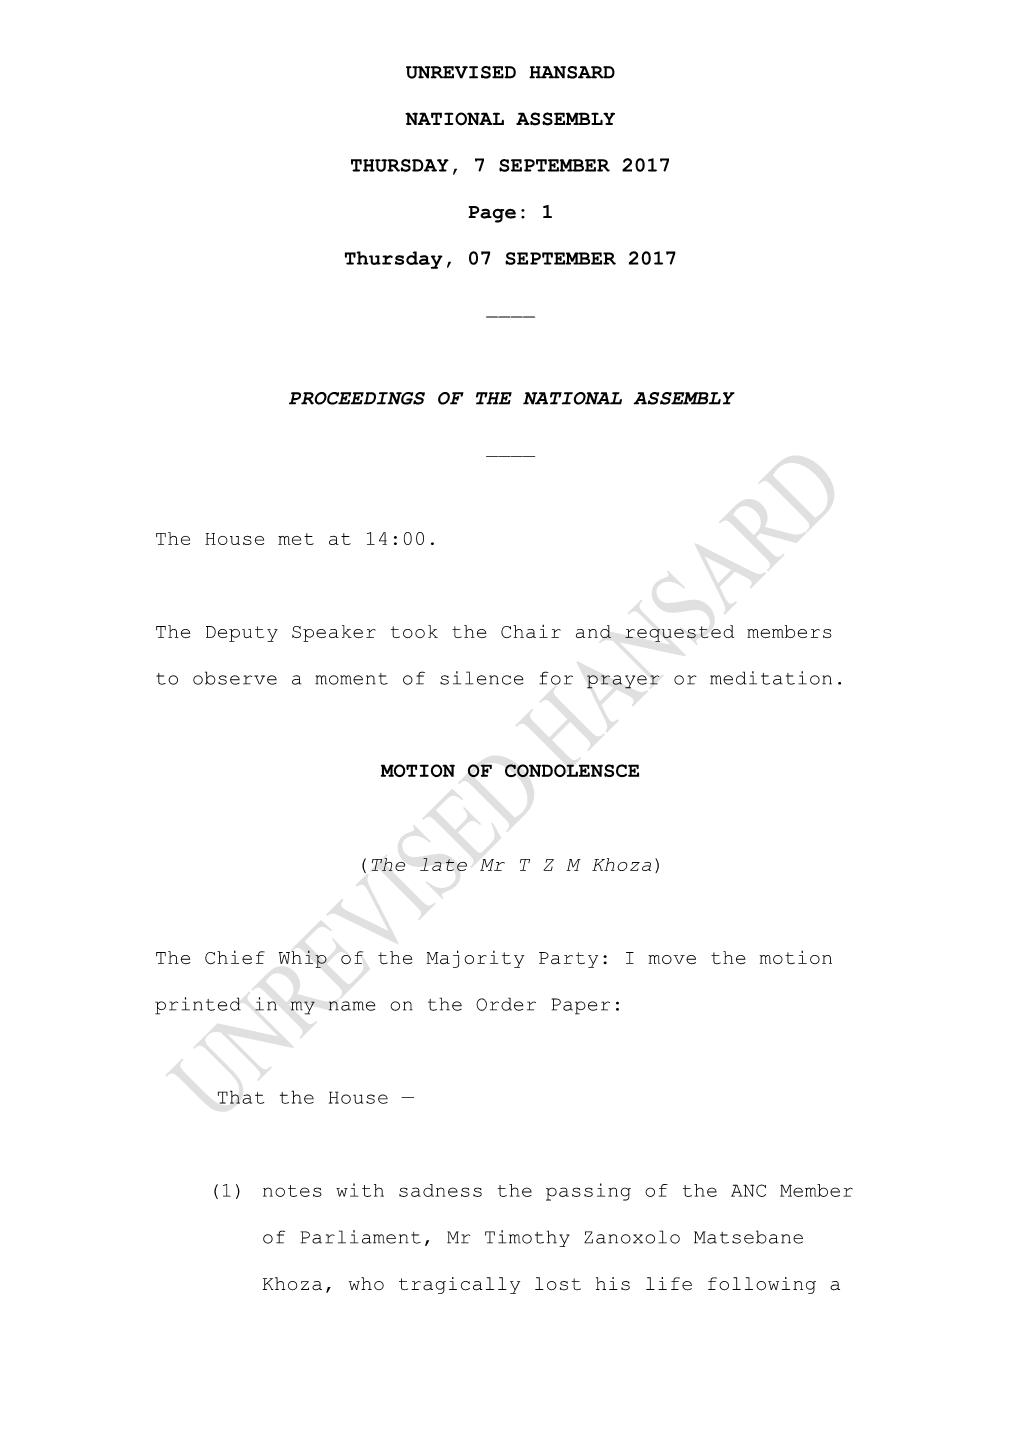 Unrevised Hansard National Assembly Thursday, 7